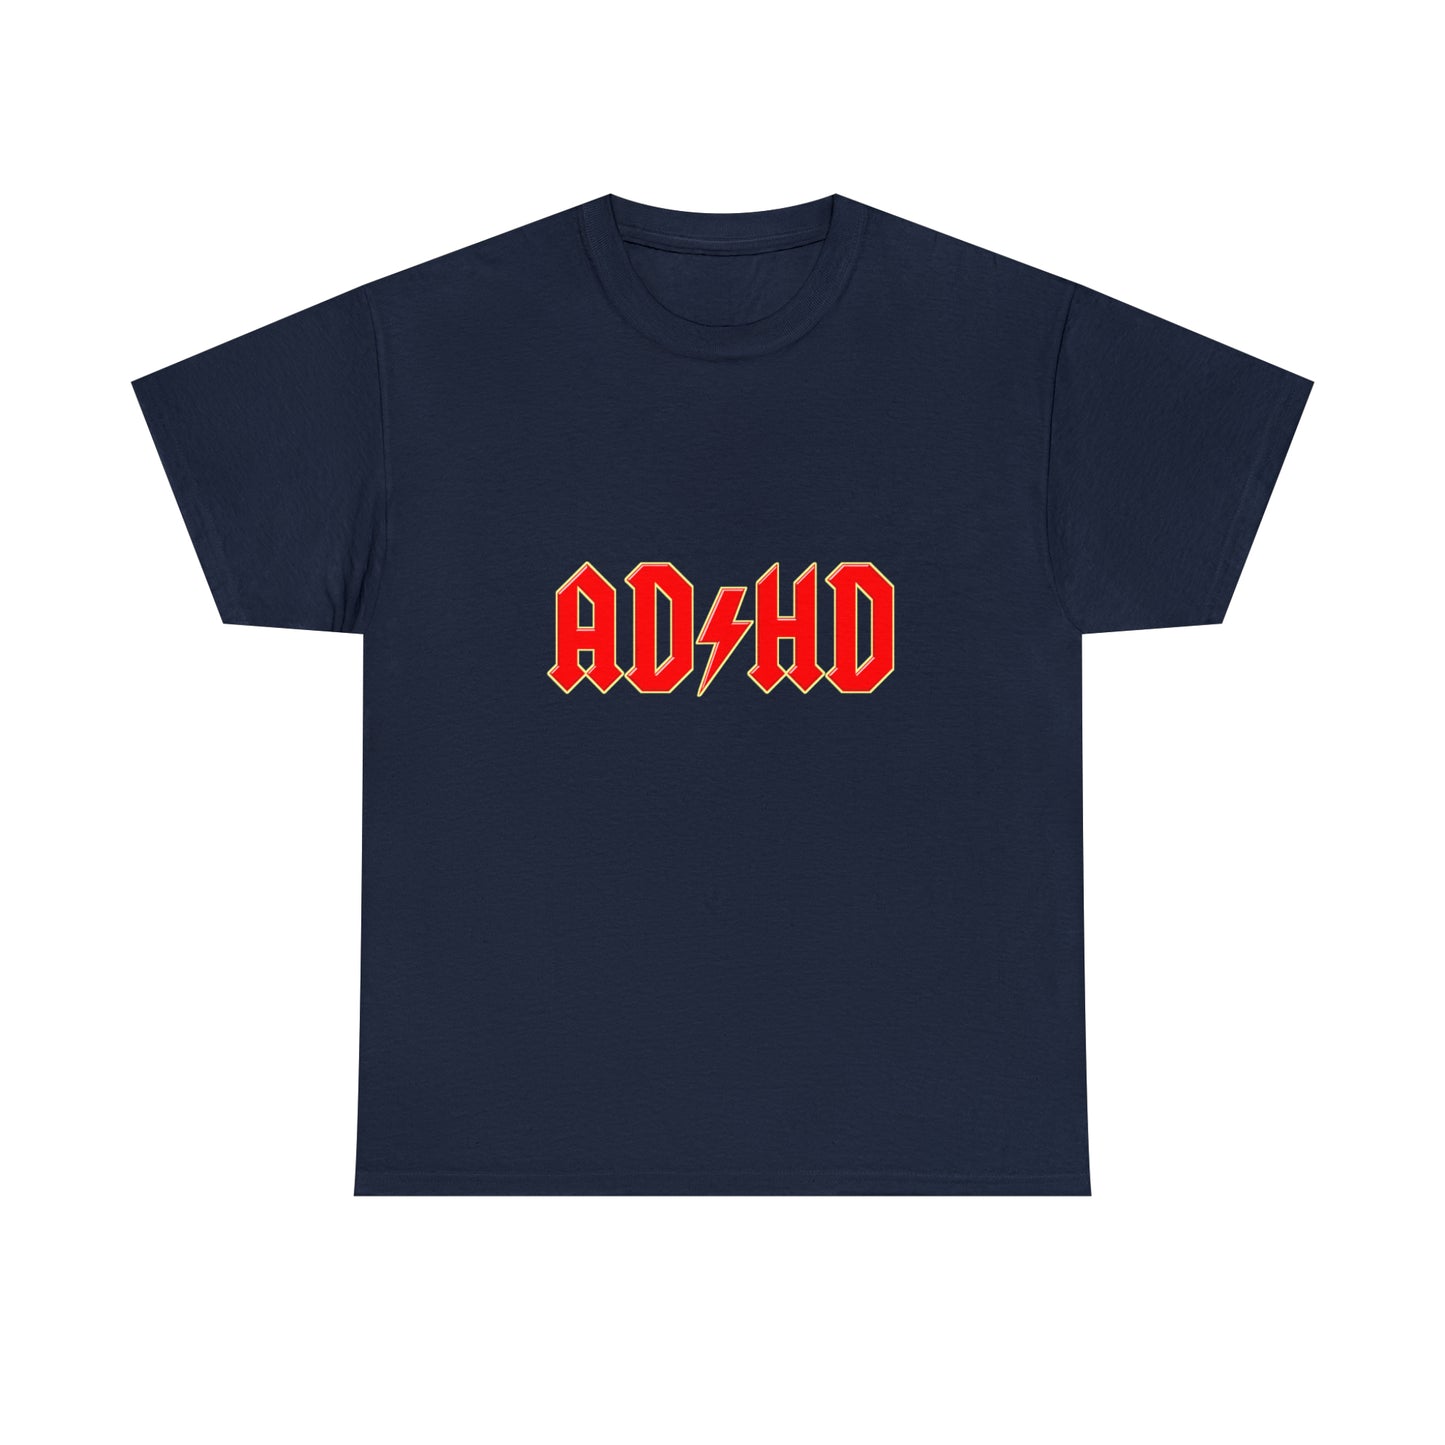 Custom Parody T-shirt, AD-HD design